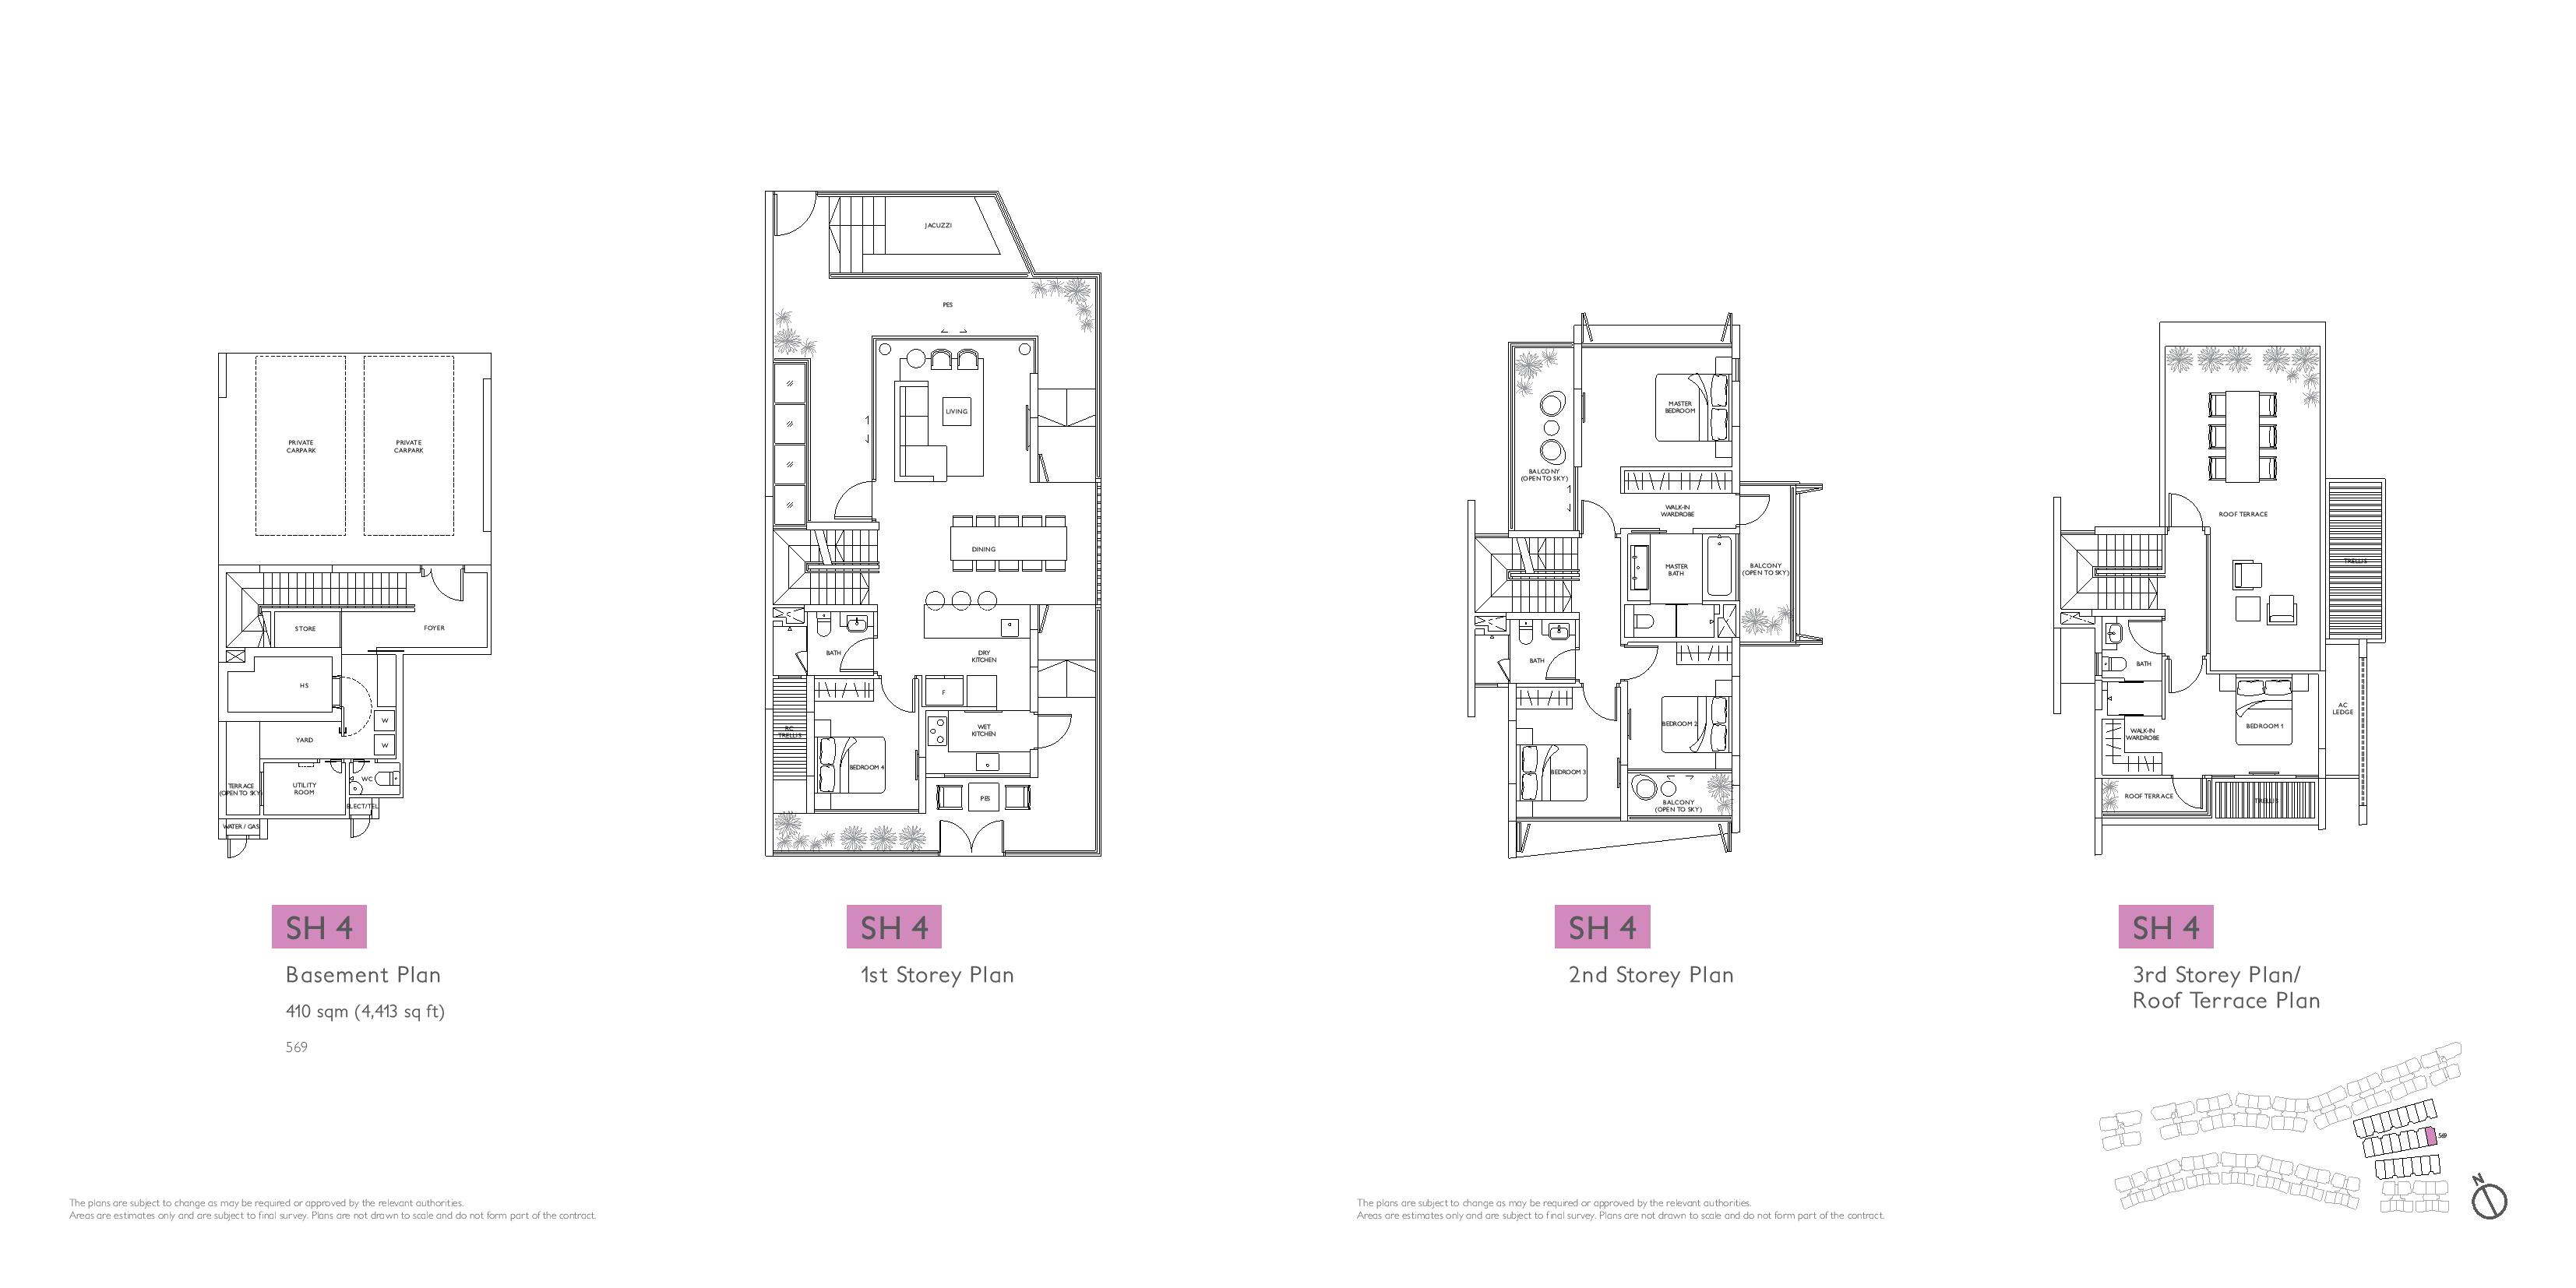 Archipelago 5 Bedroom Strata-Landed House Type SH4 Floor Plans